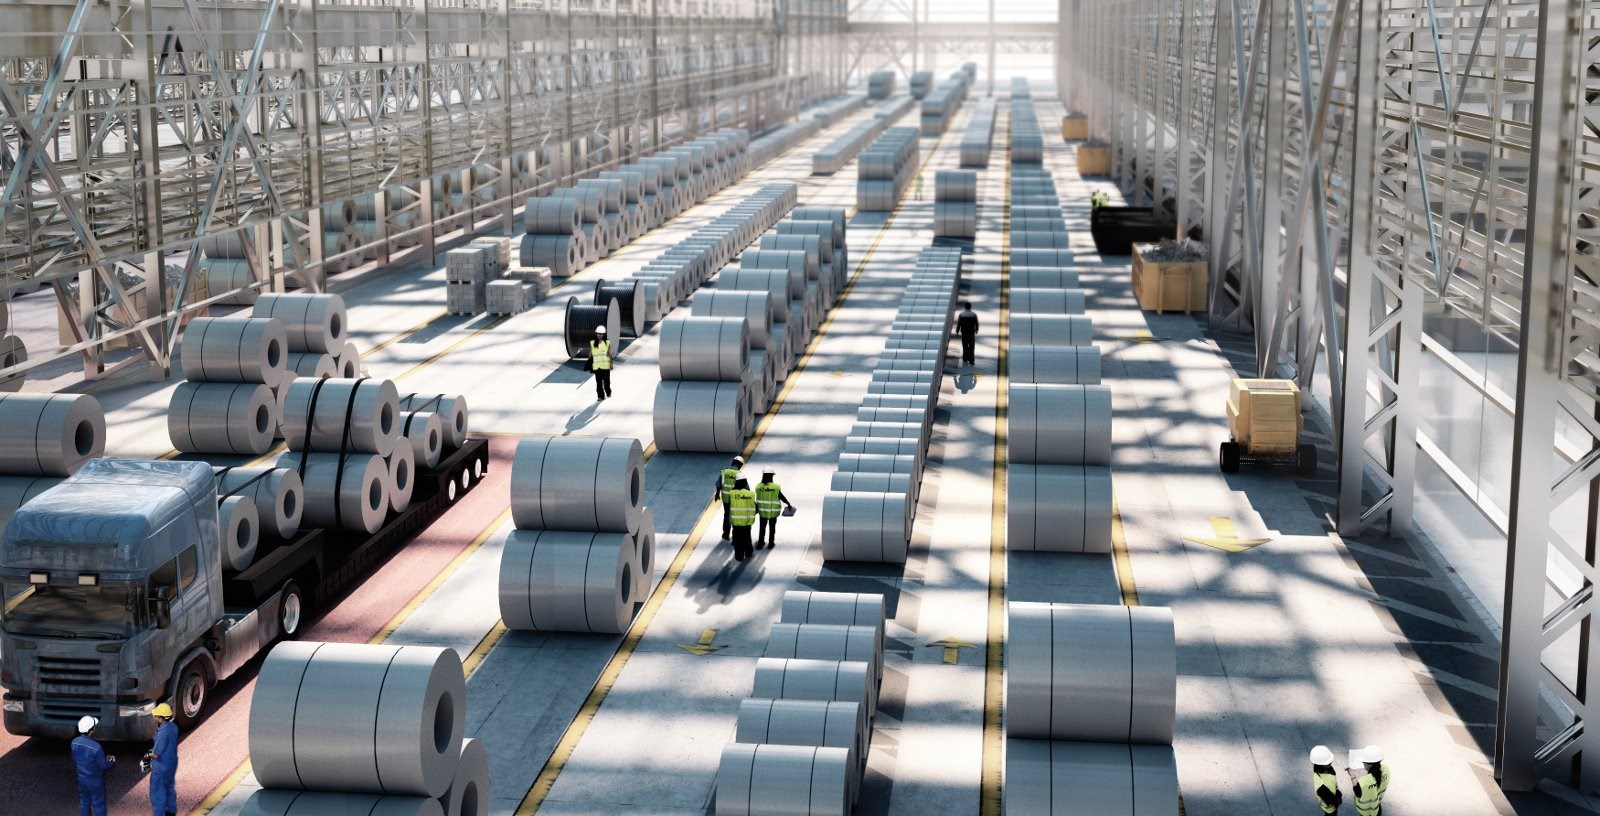 EGA cast Aluminium production surpasses 30 million tonnes